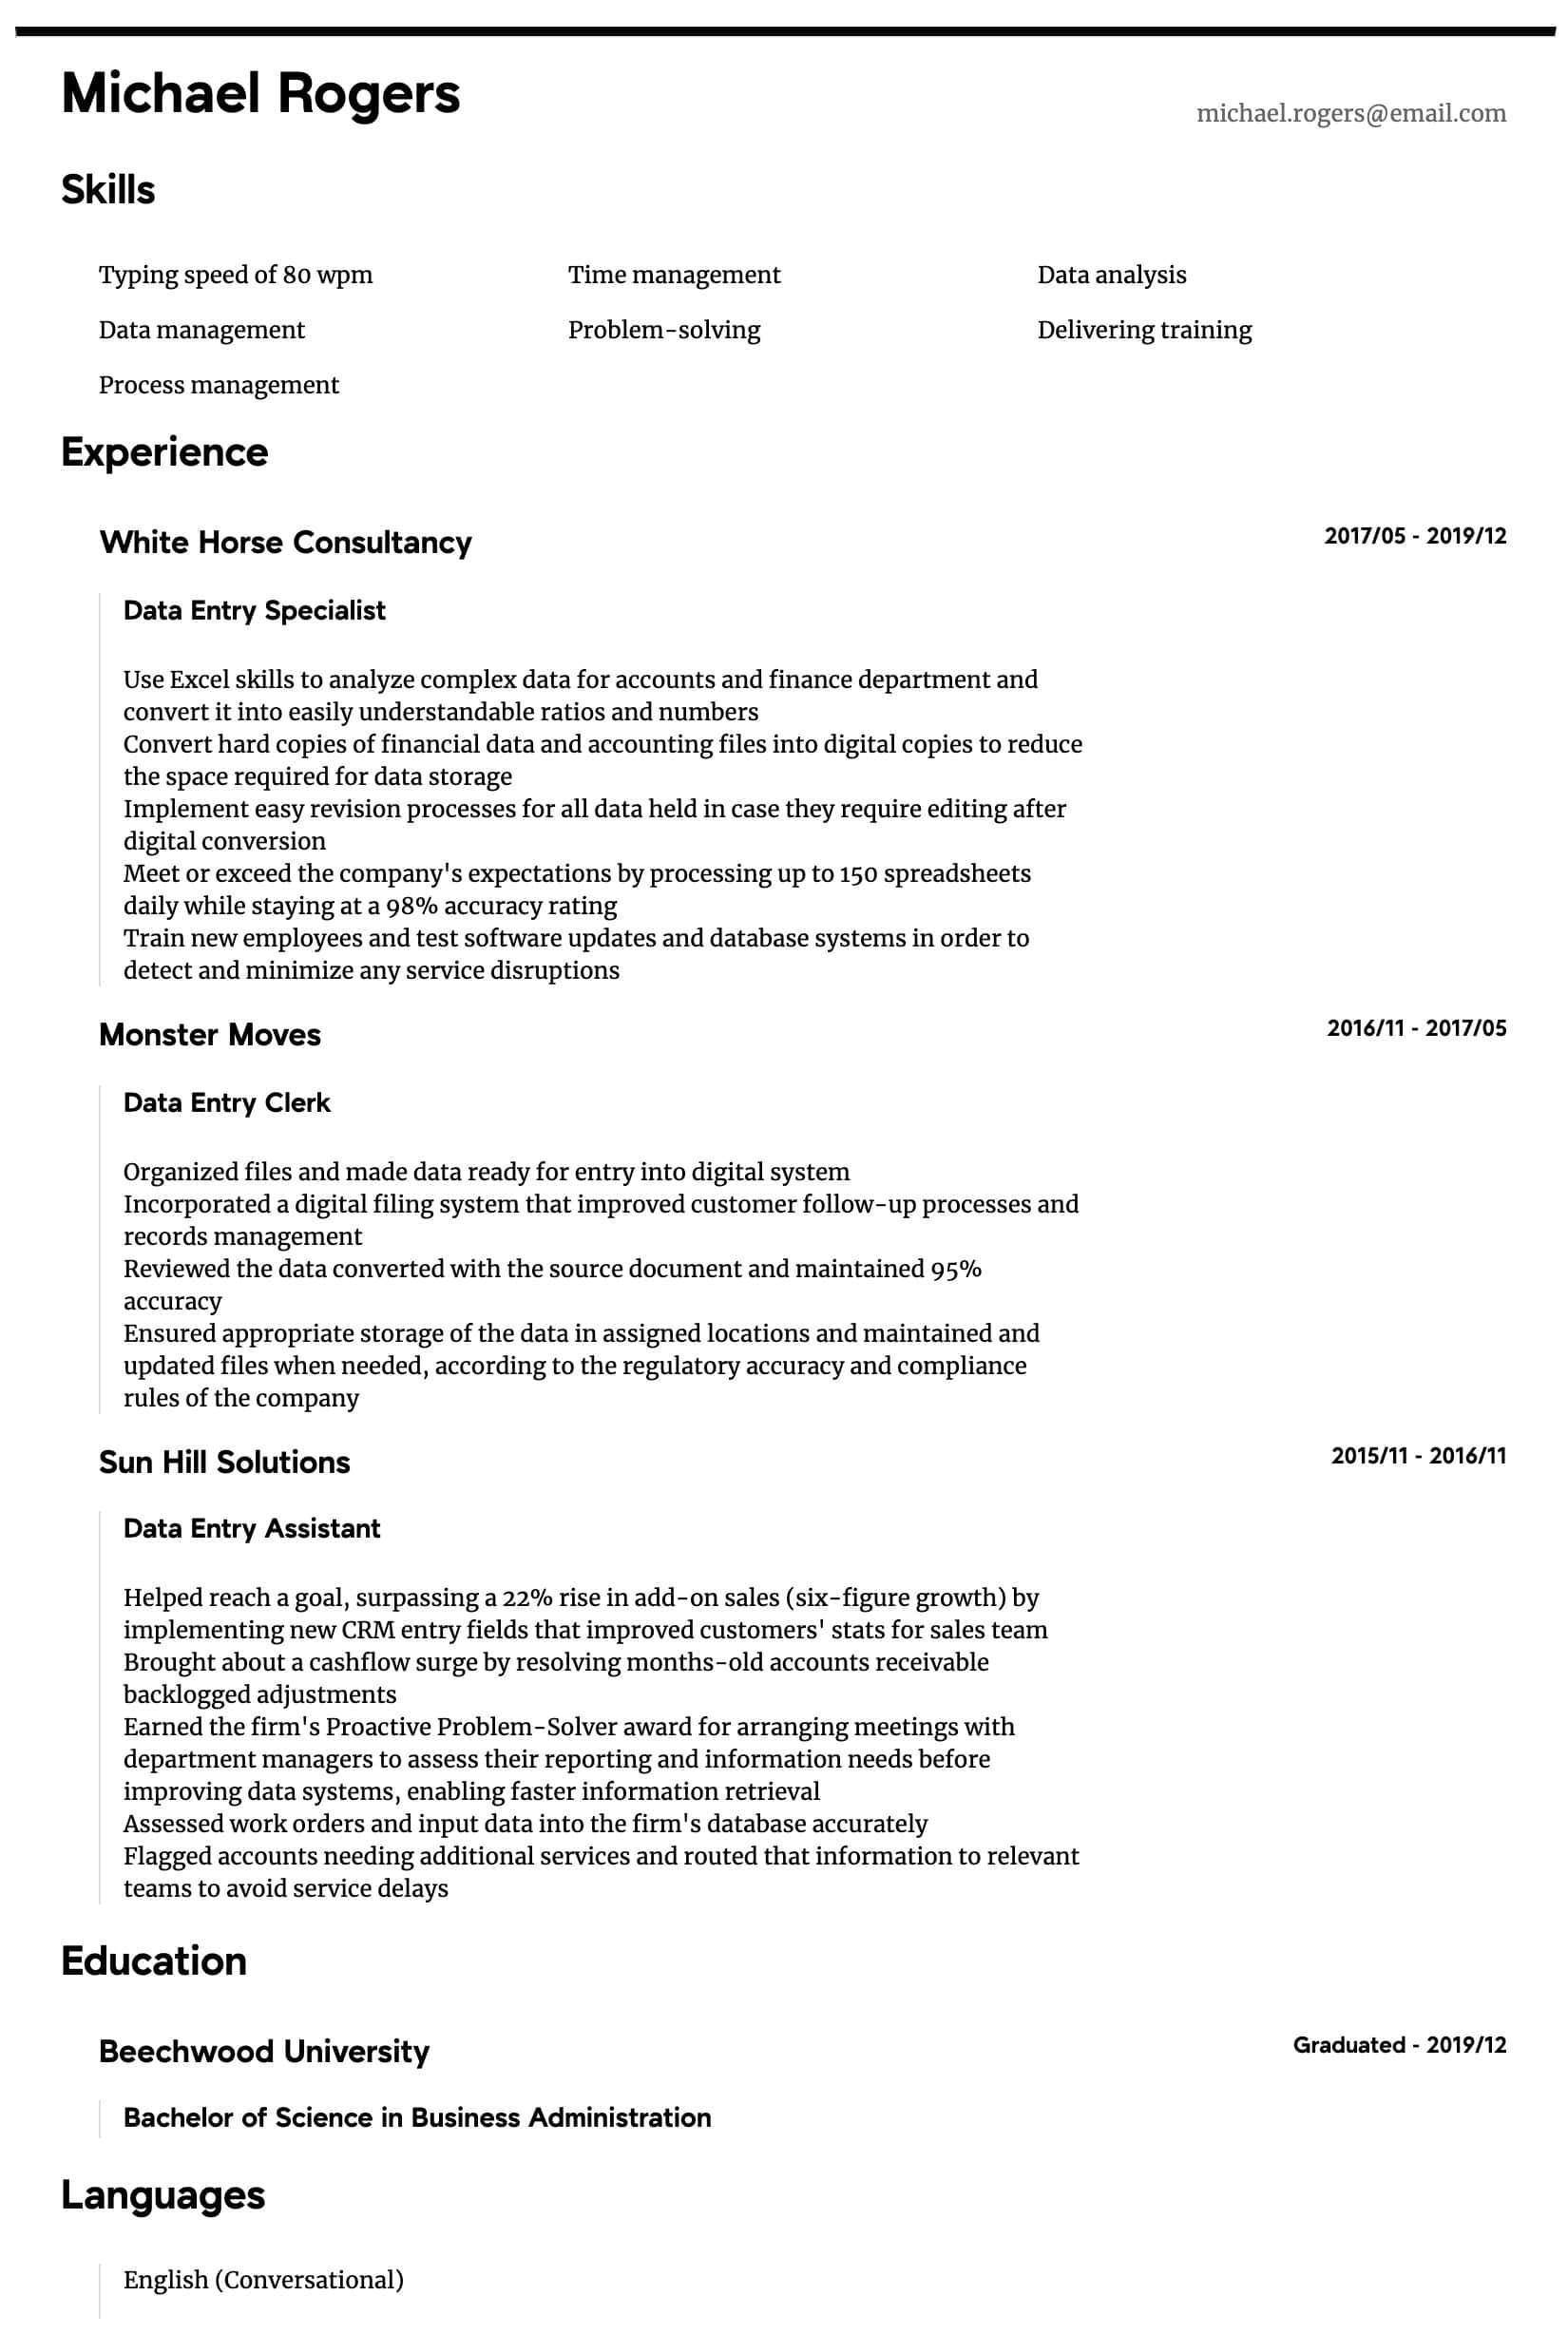 Data Entry Job Description Resume Sample Data Entry Resume Samples All Experience Levels Resume.com …